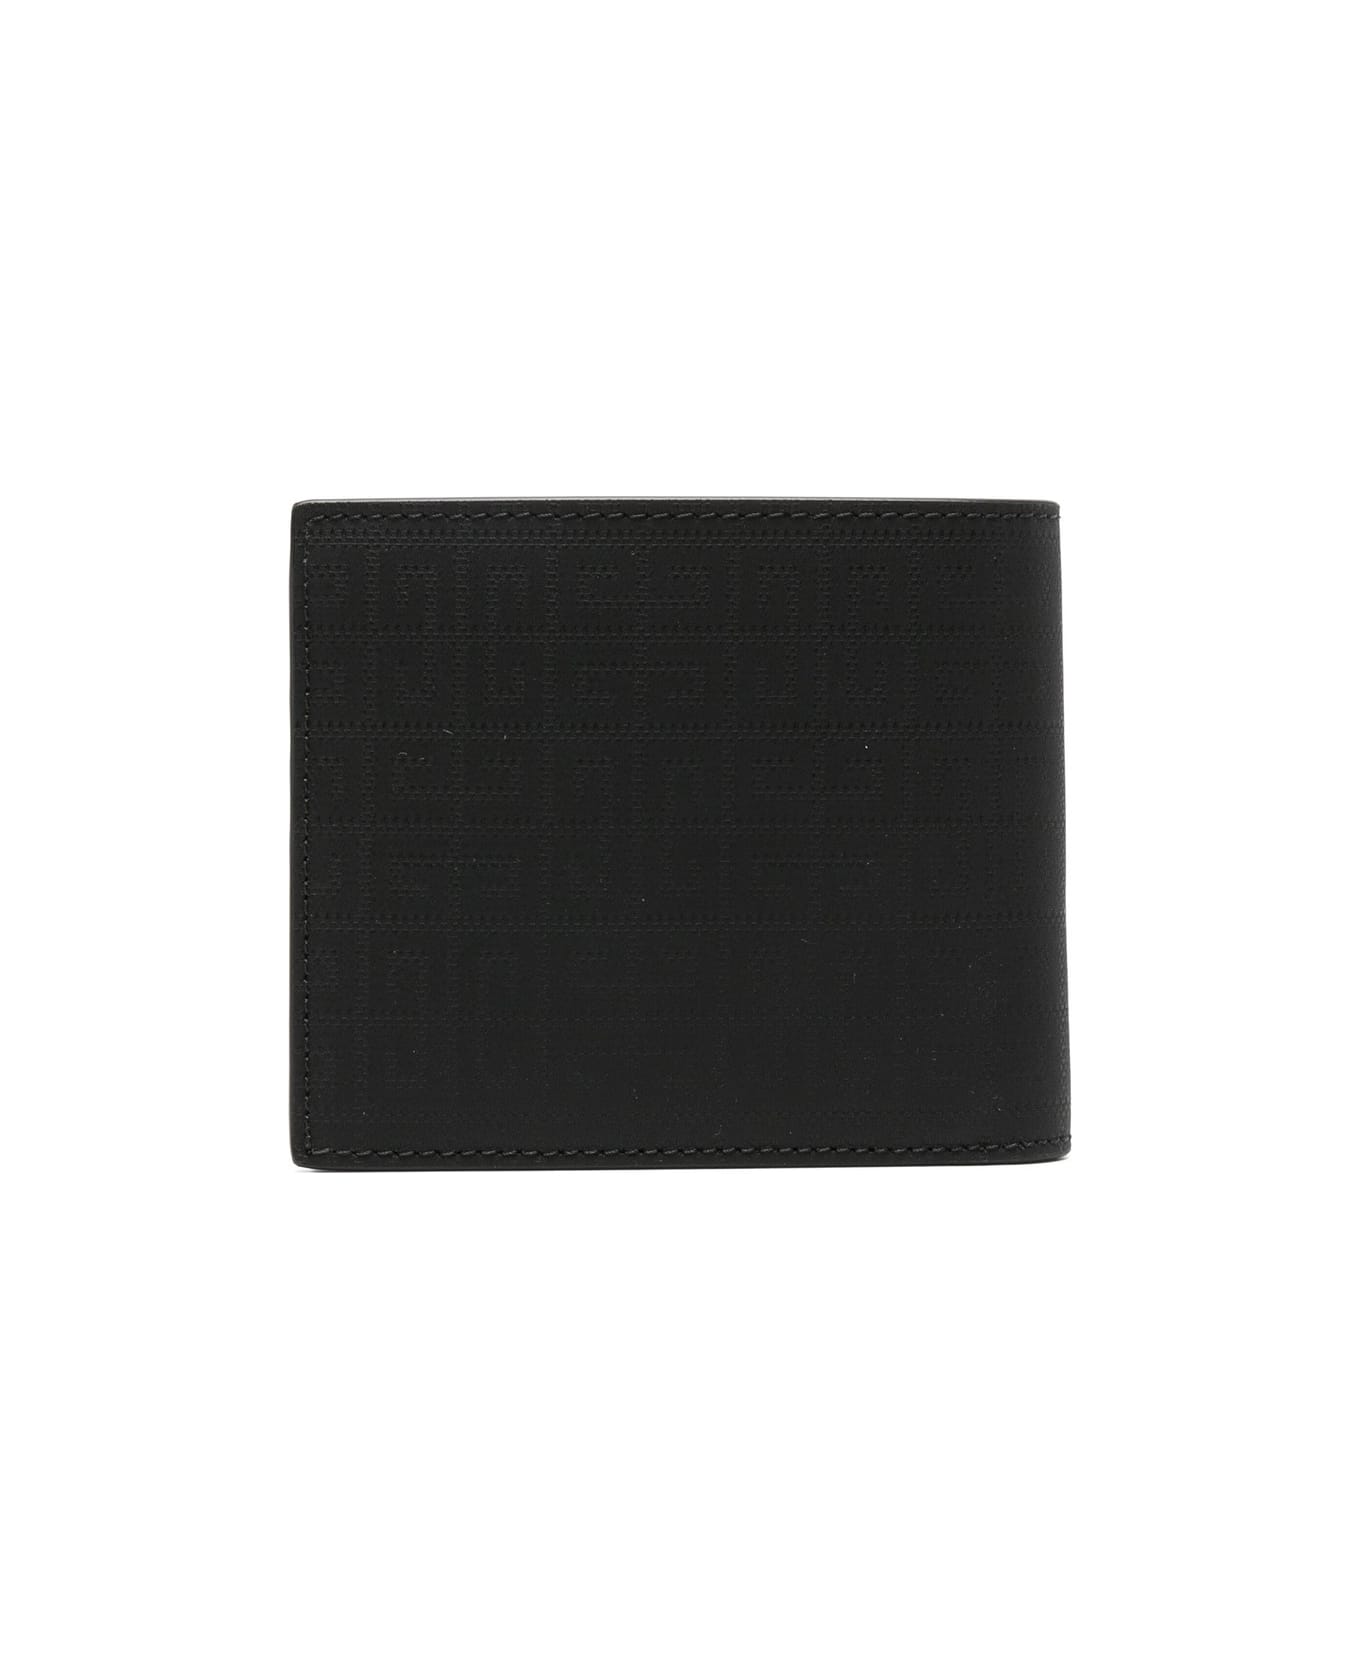 Givenchy Wallet In Black 4g Nylon - Black